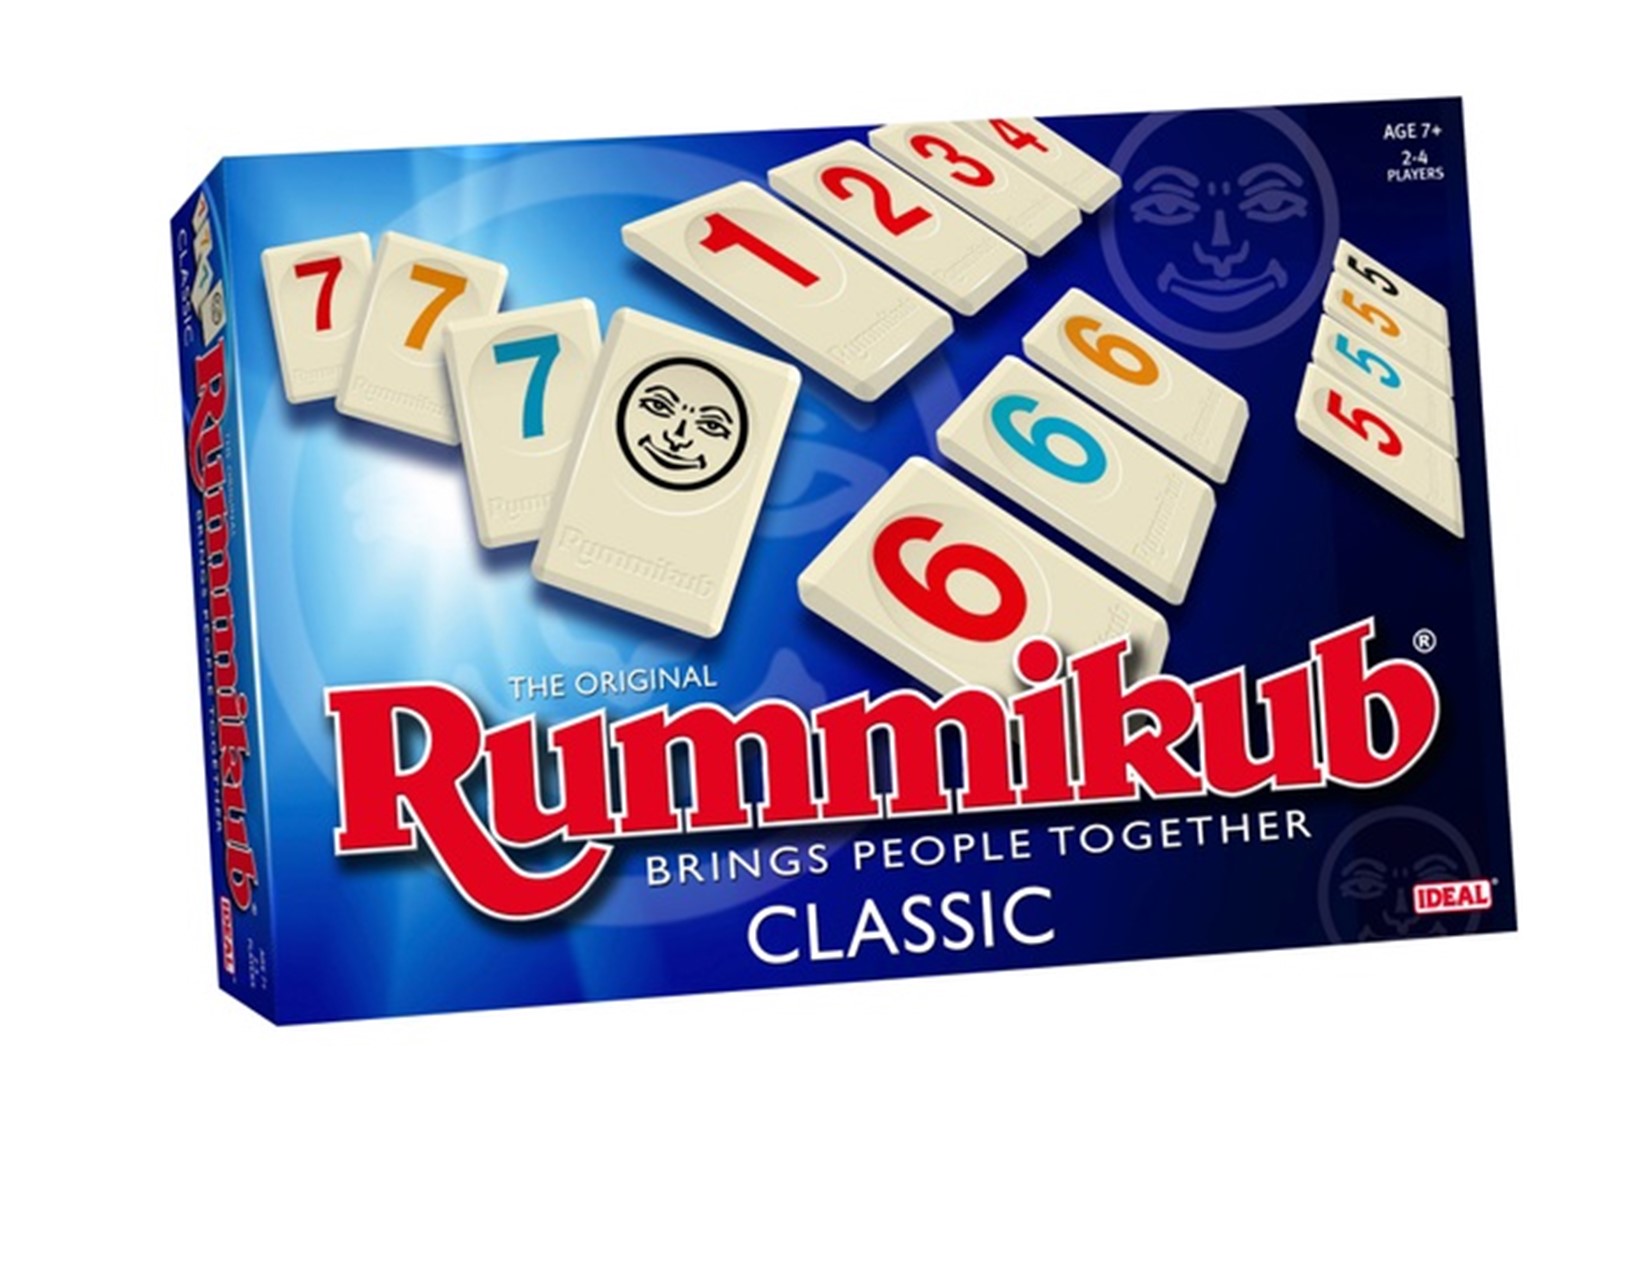 Rummikub game board